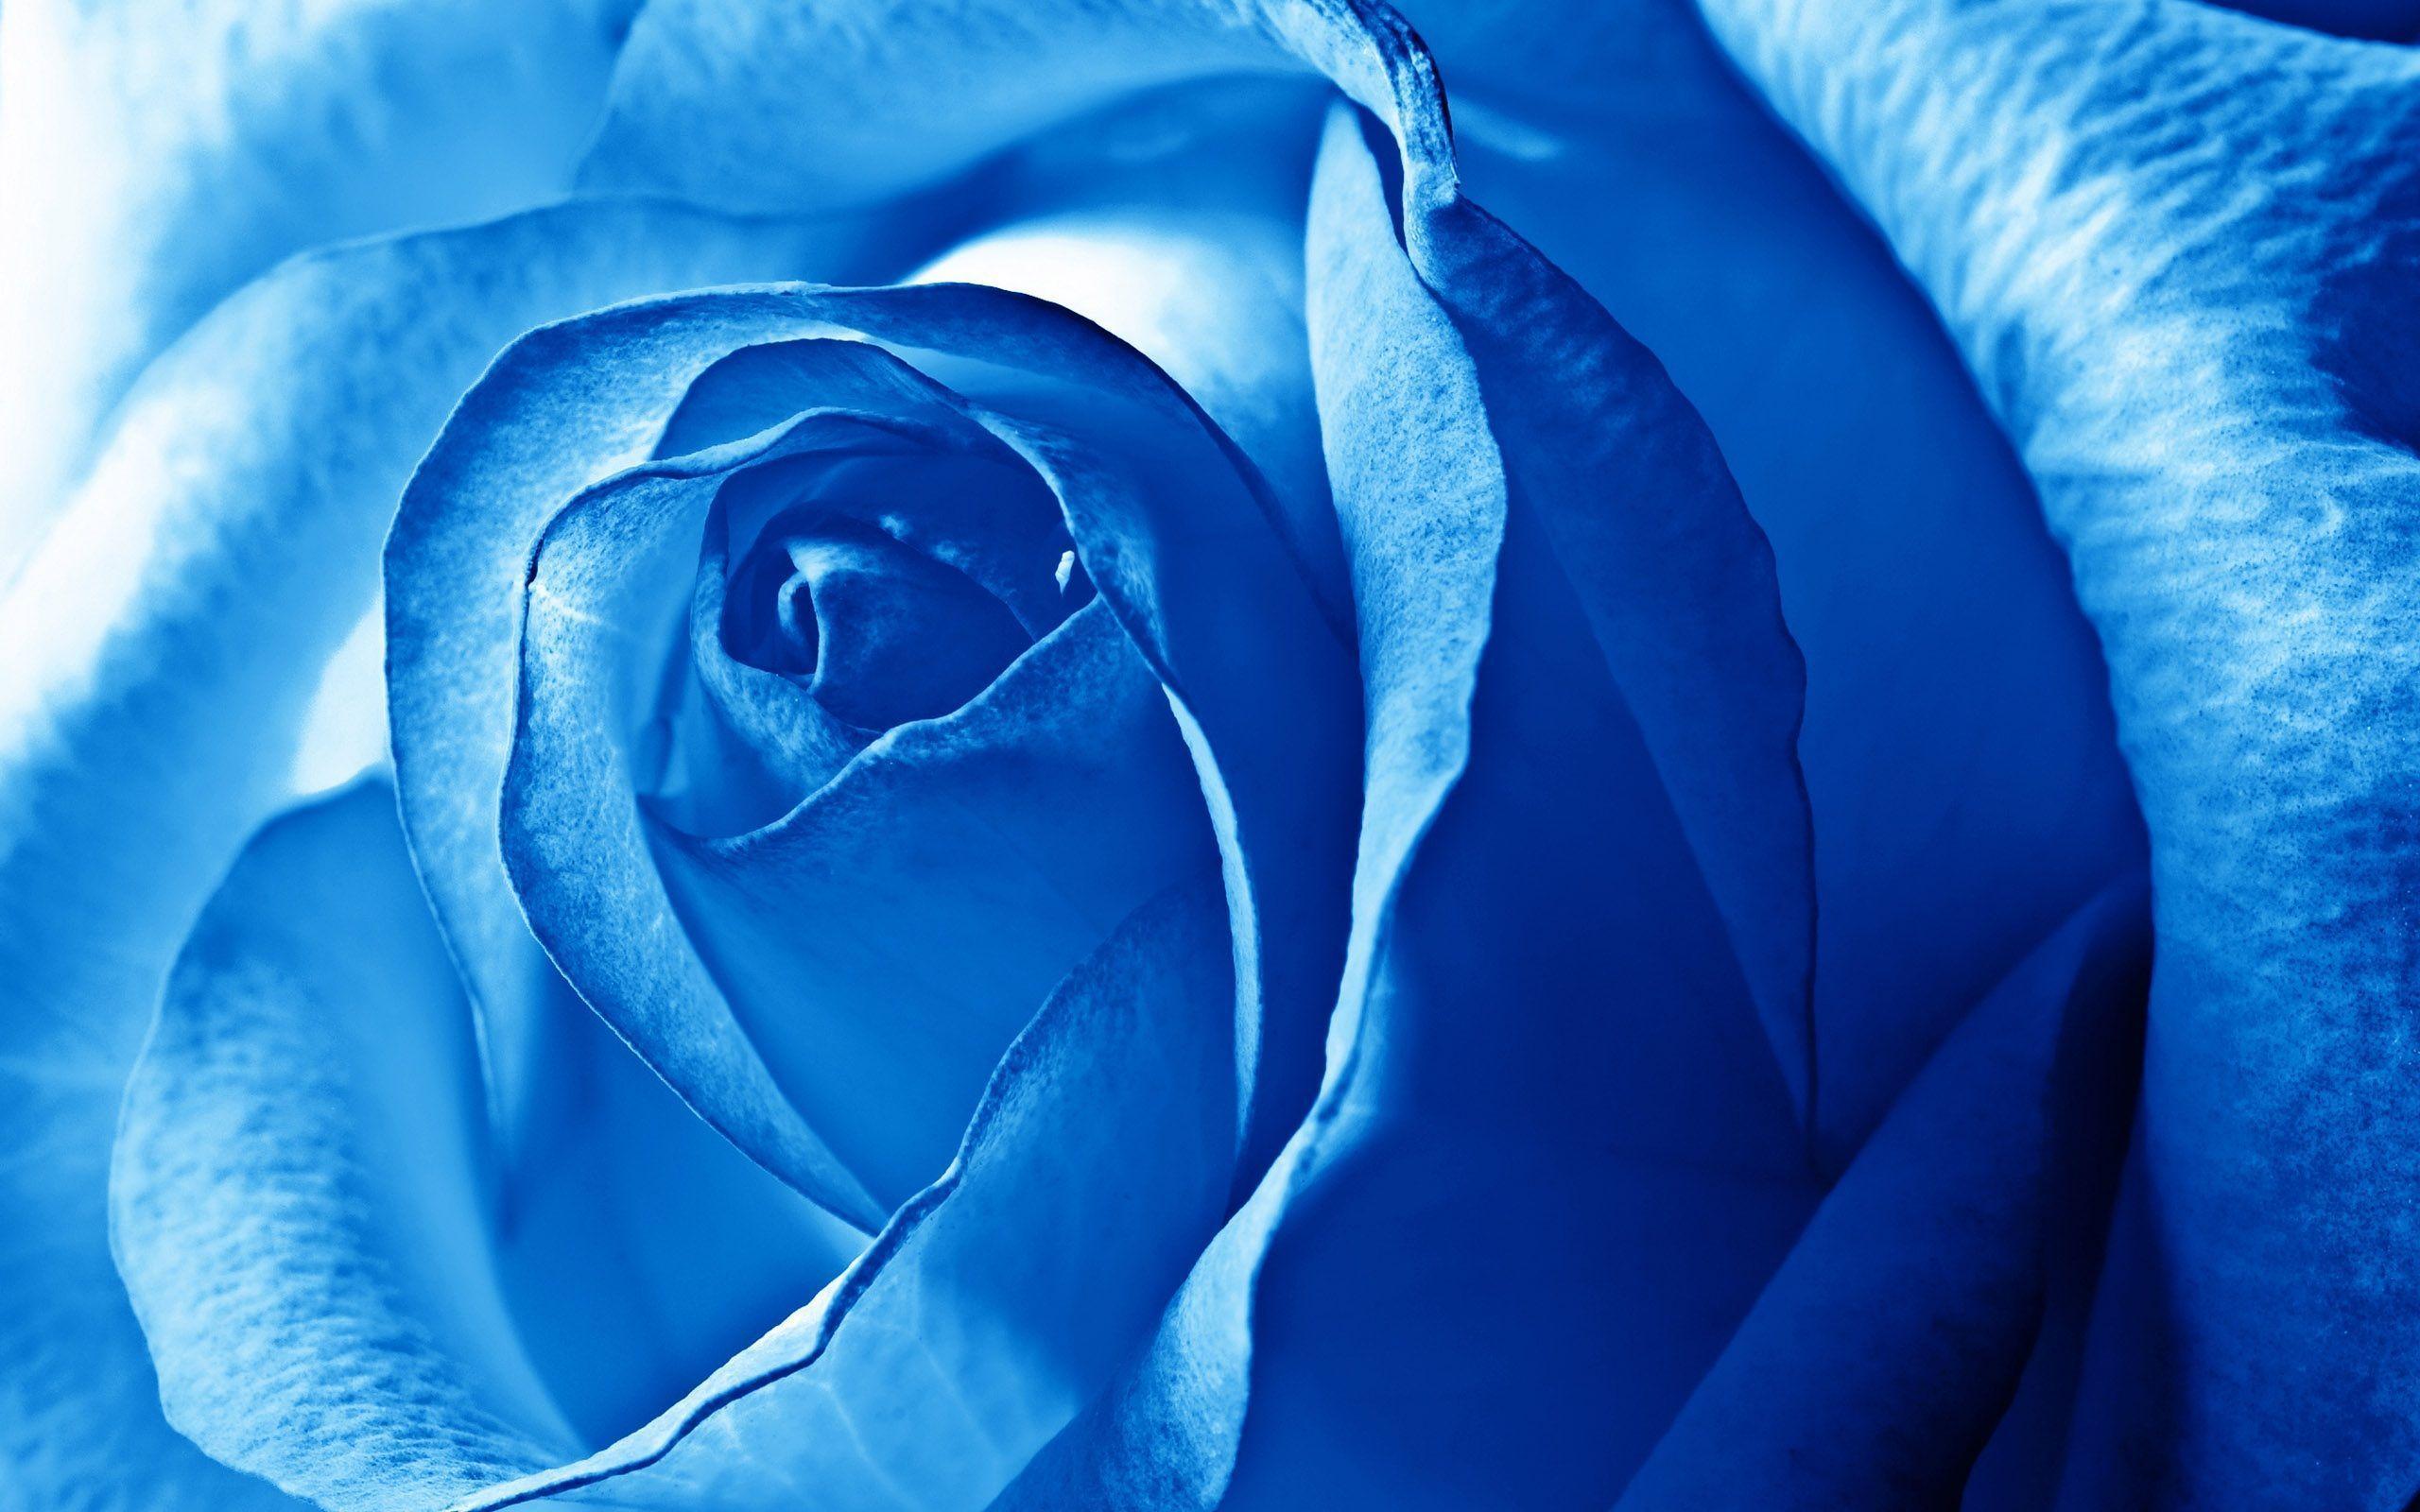 Blue Flowers Picture Widescreen 2 HD Wallpaper